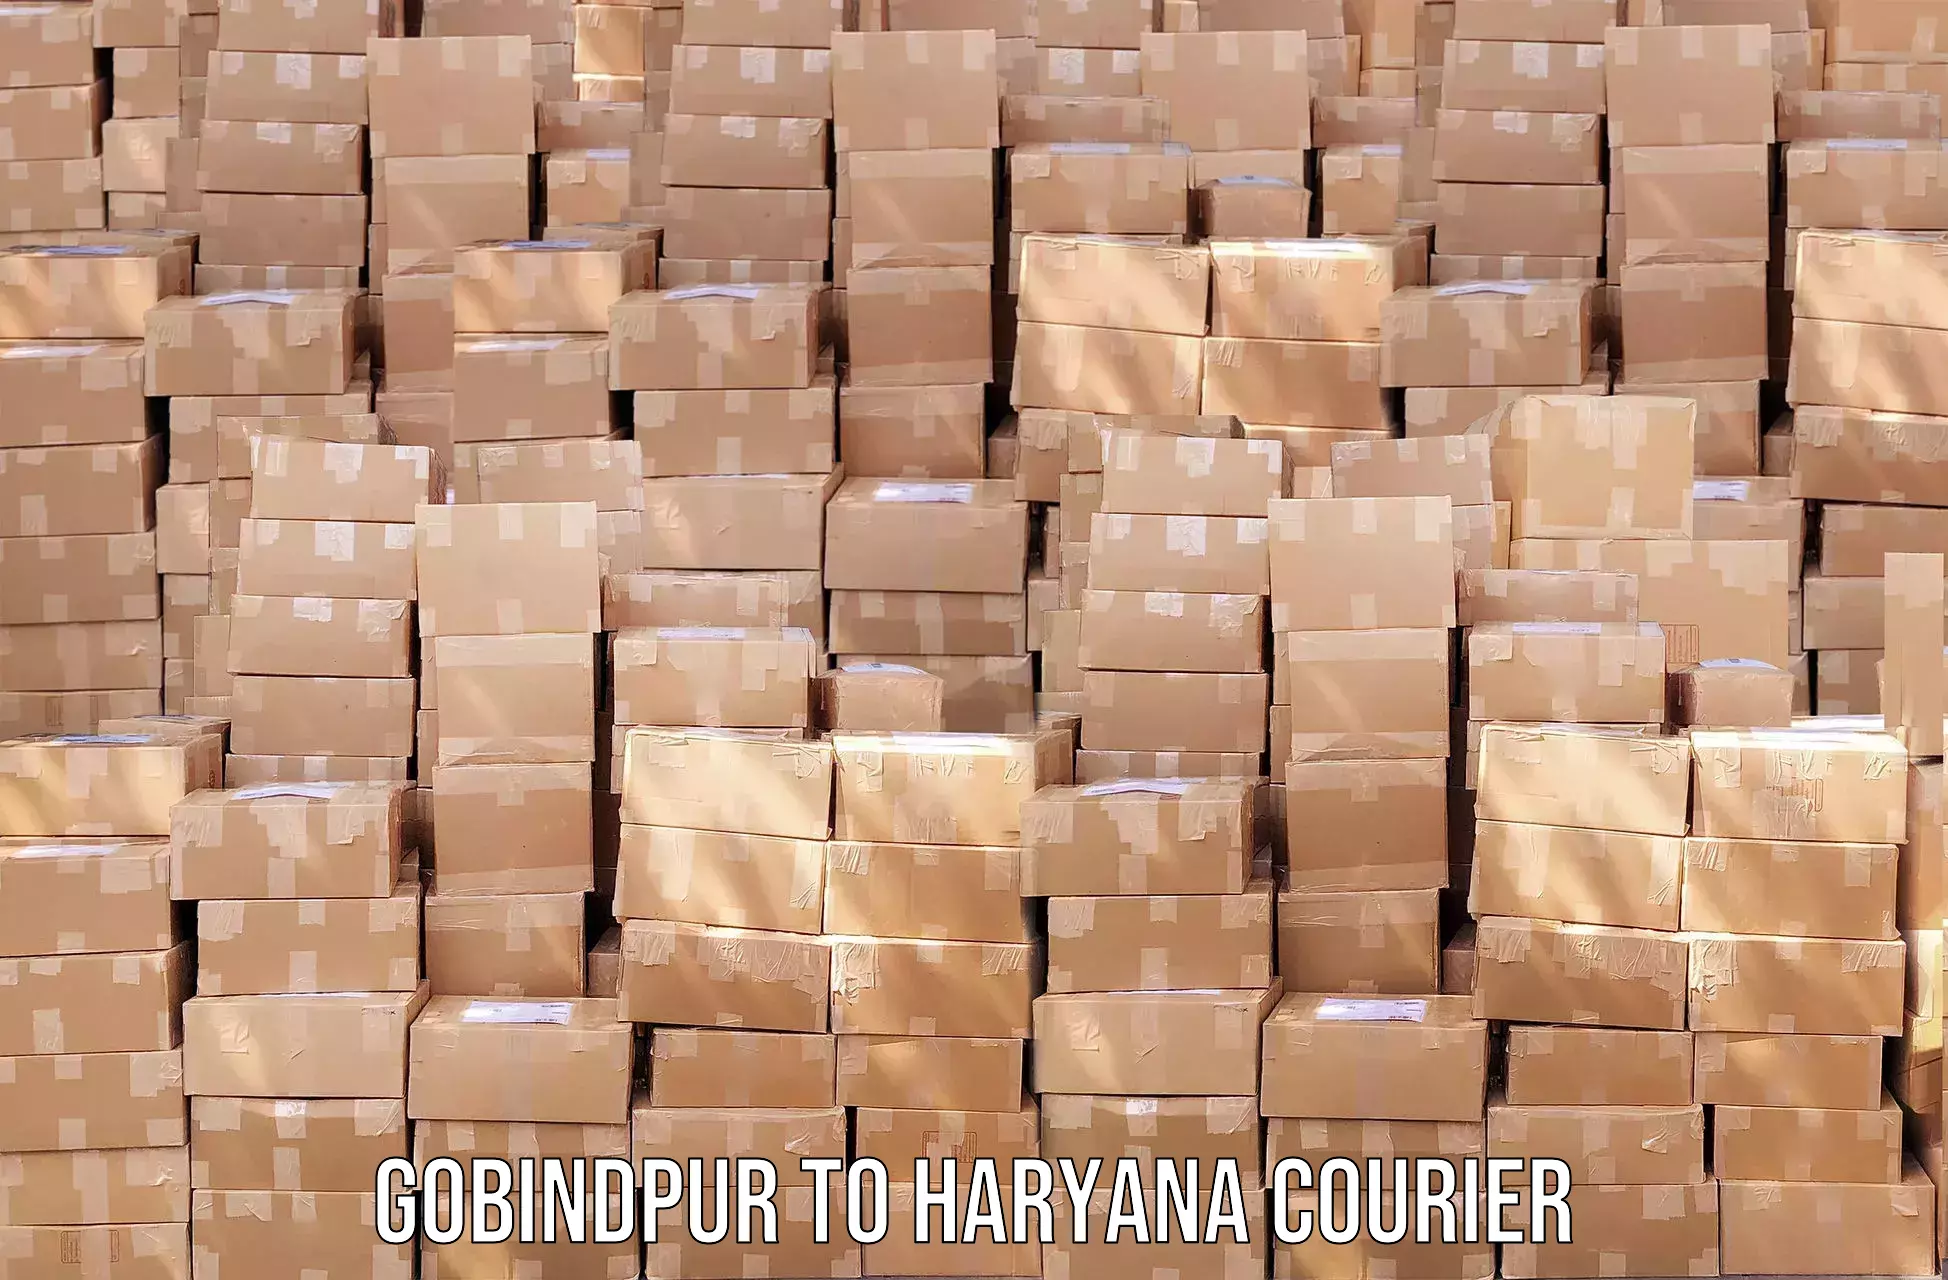 Courier app Gobindpur to Loharu